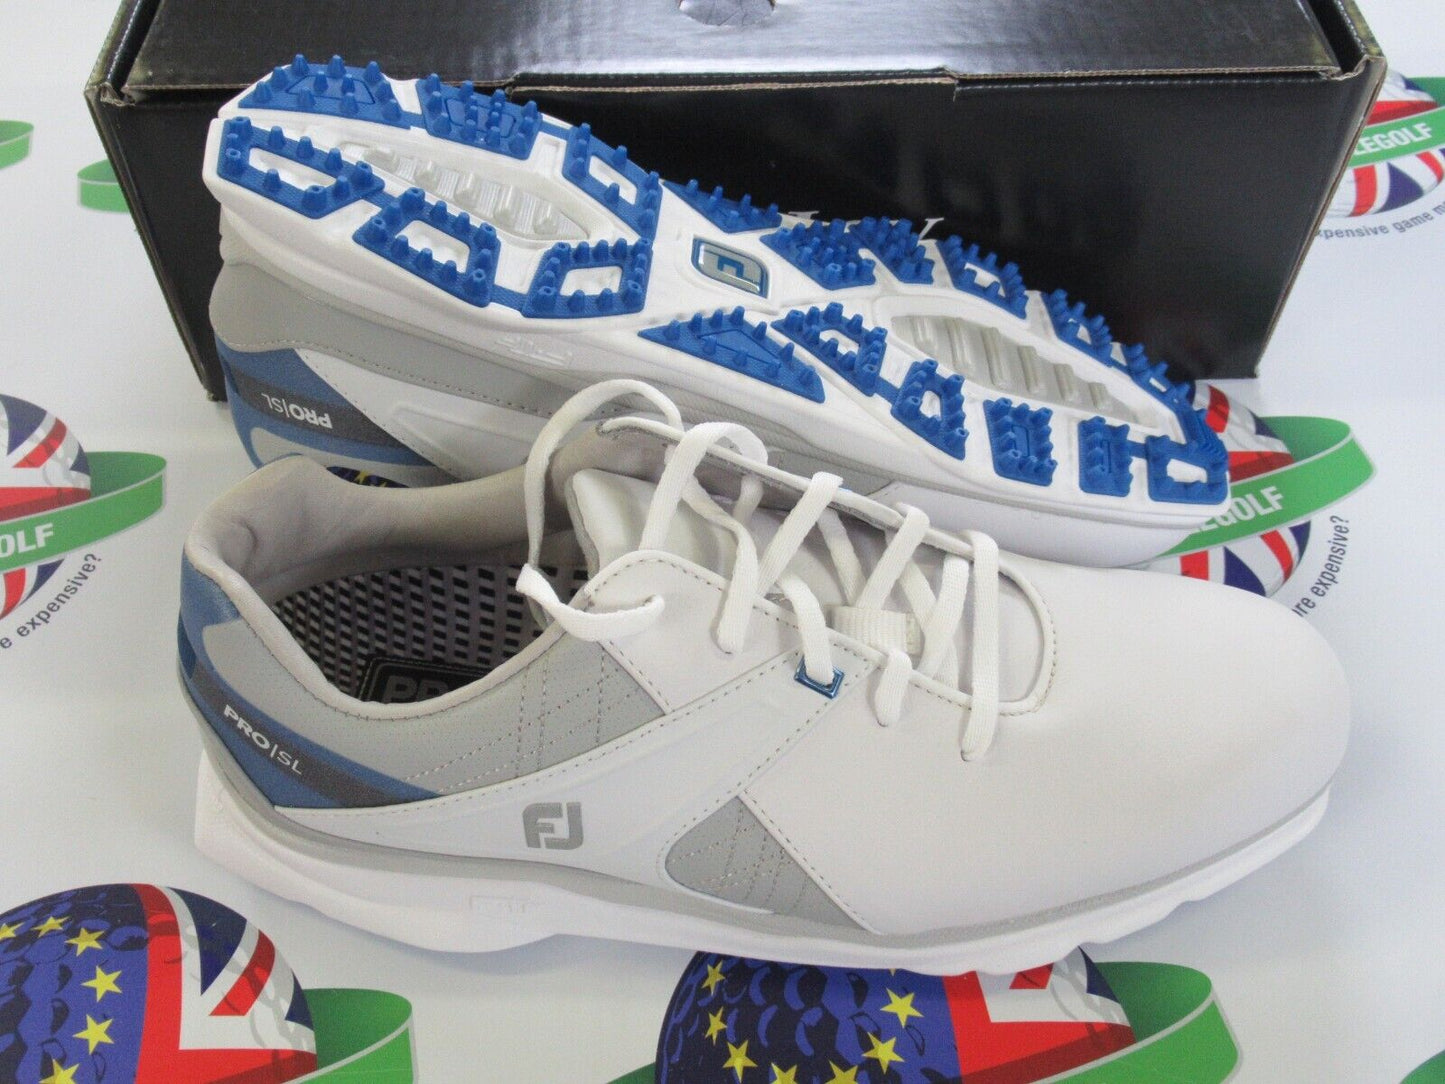 footjoy pro sl waterproof golf shoes 53811k white/grey/blue uk size 7 medium